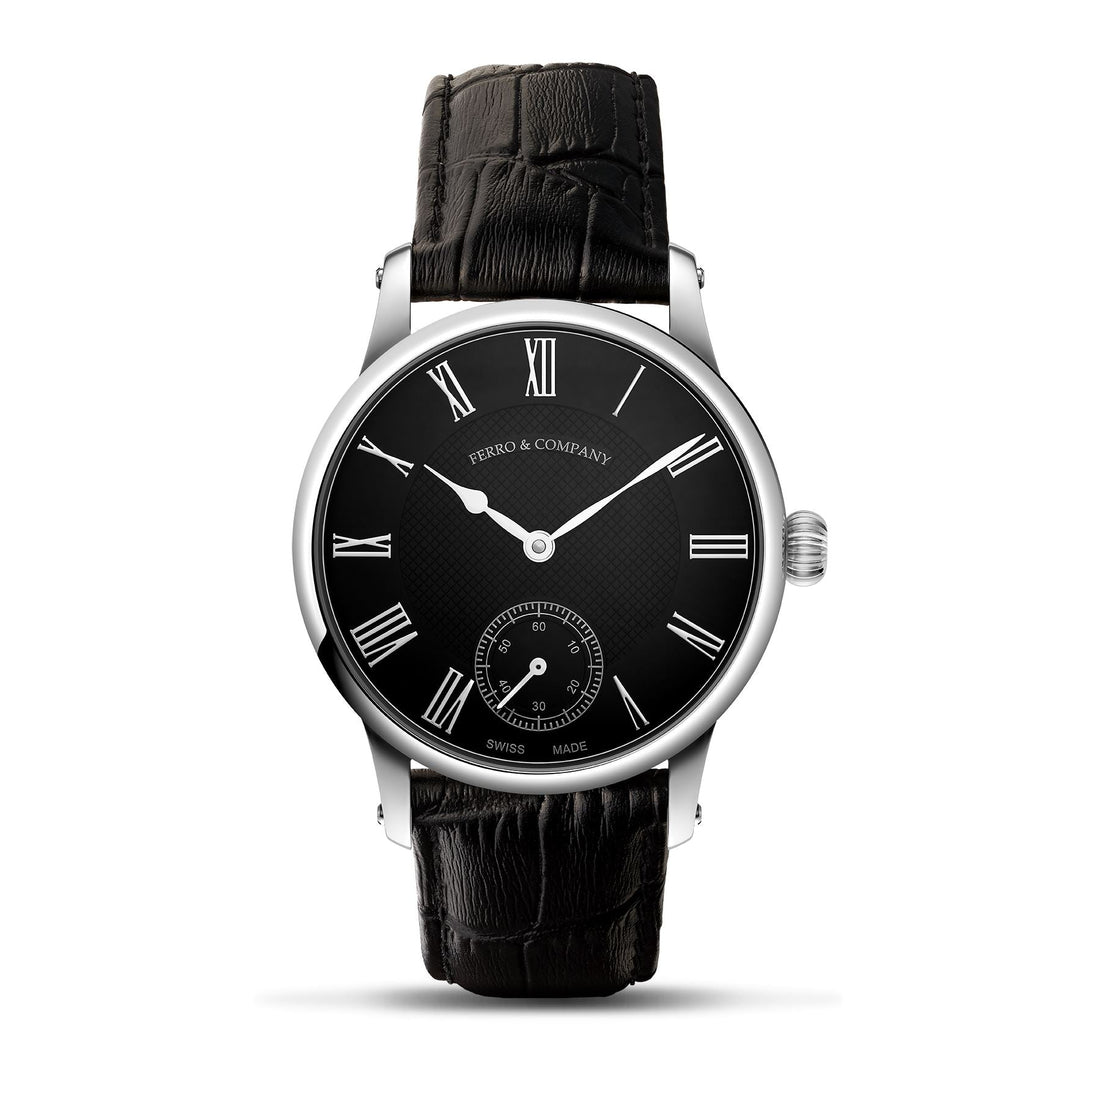 TRADITUM VINTAGE STYLE DRESS WATCH BLACK / ROMAN - Ferro & Company Watches